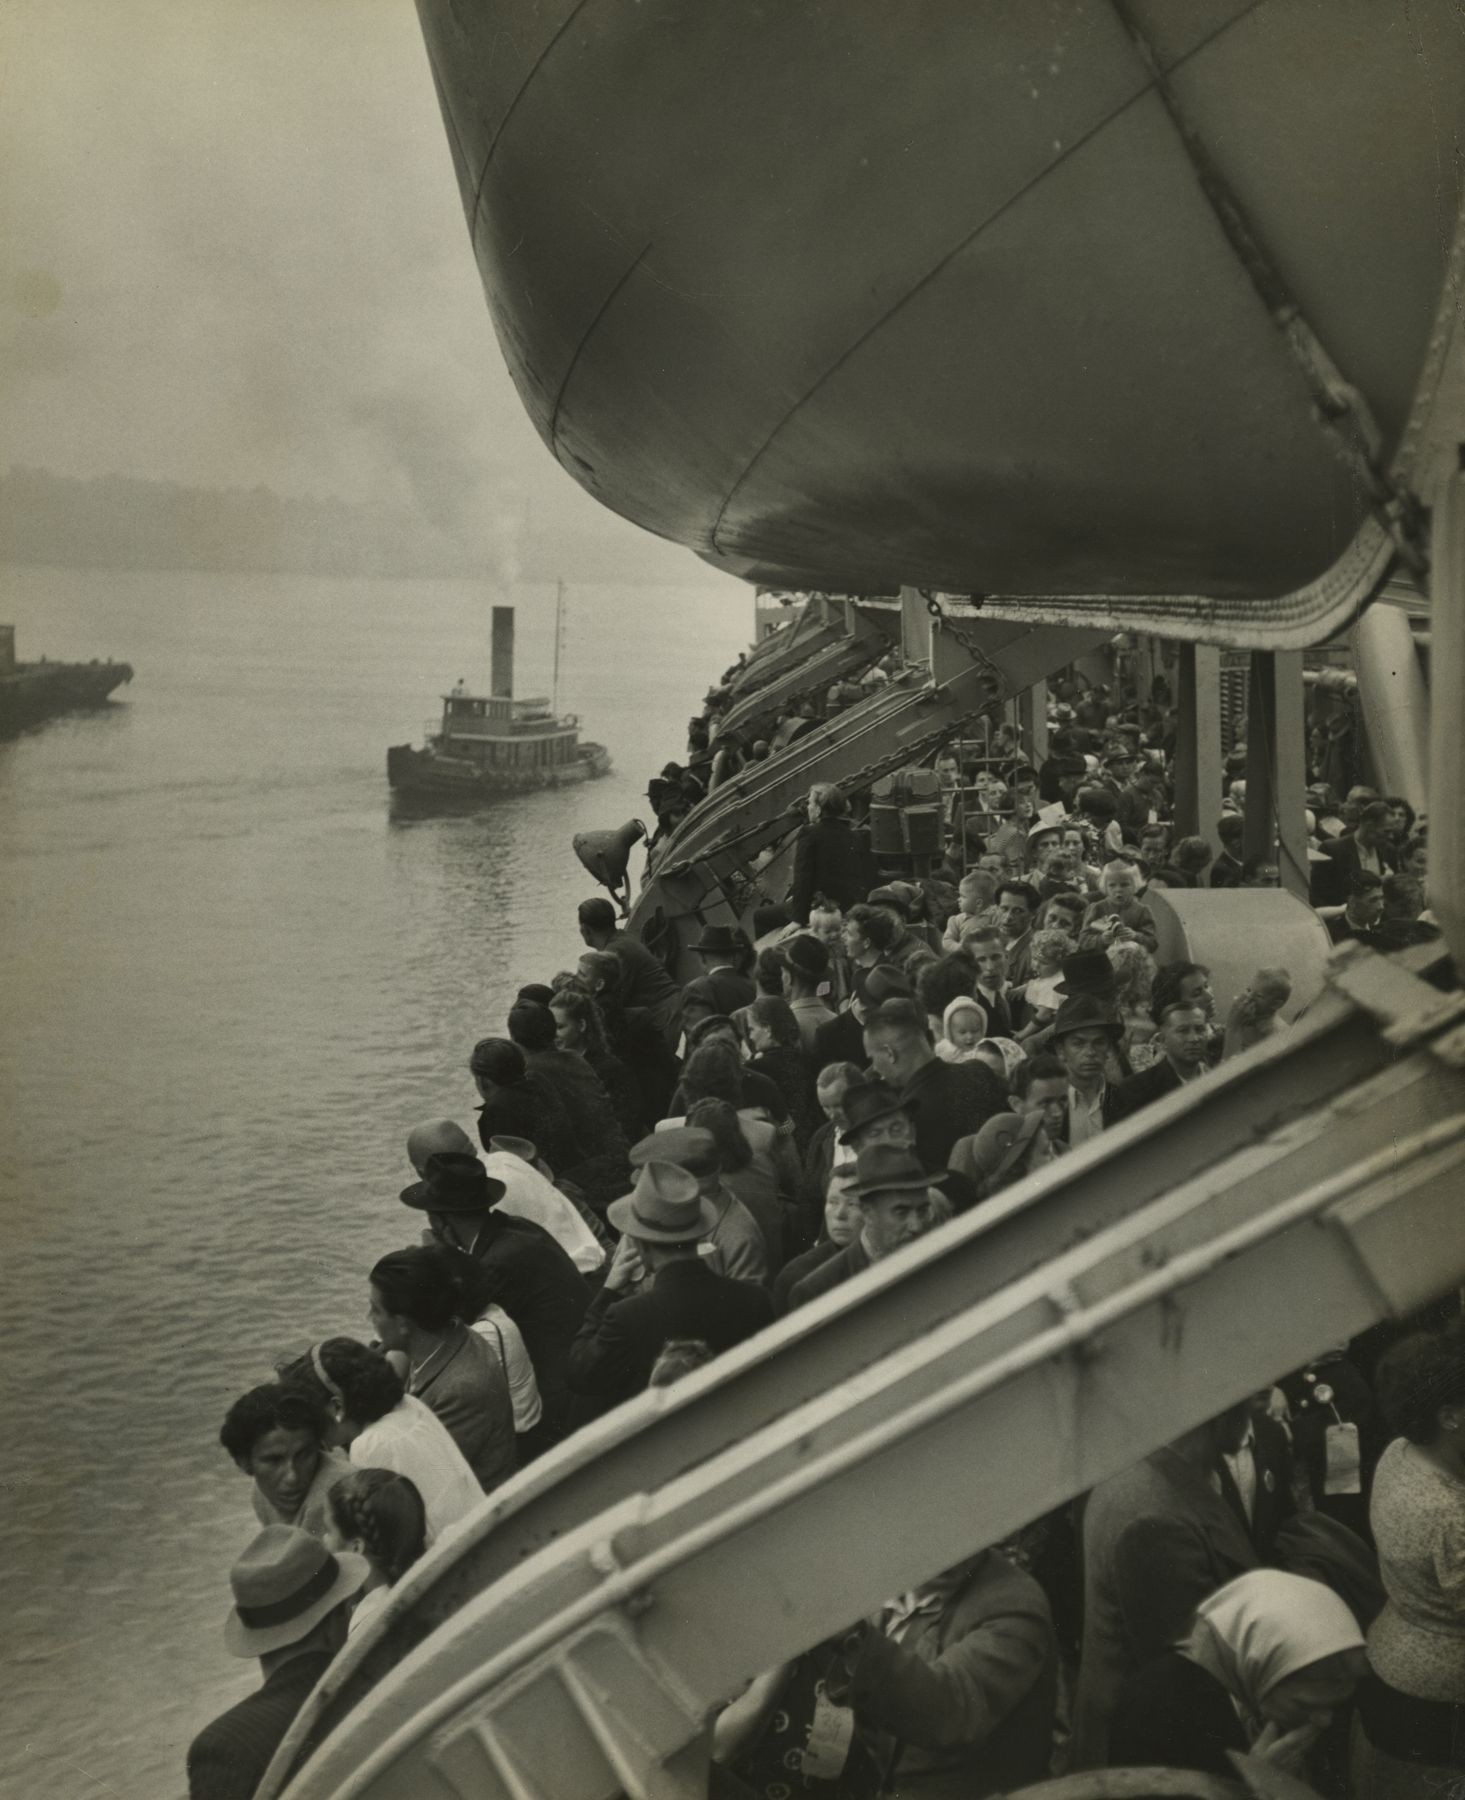 Судно с иммигрантами в бухте Нью-Йорка, 1951. Фотограф Эрнст Хаас